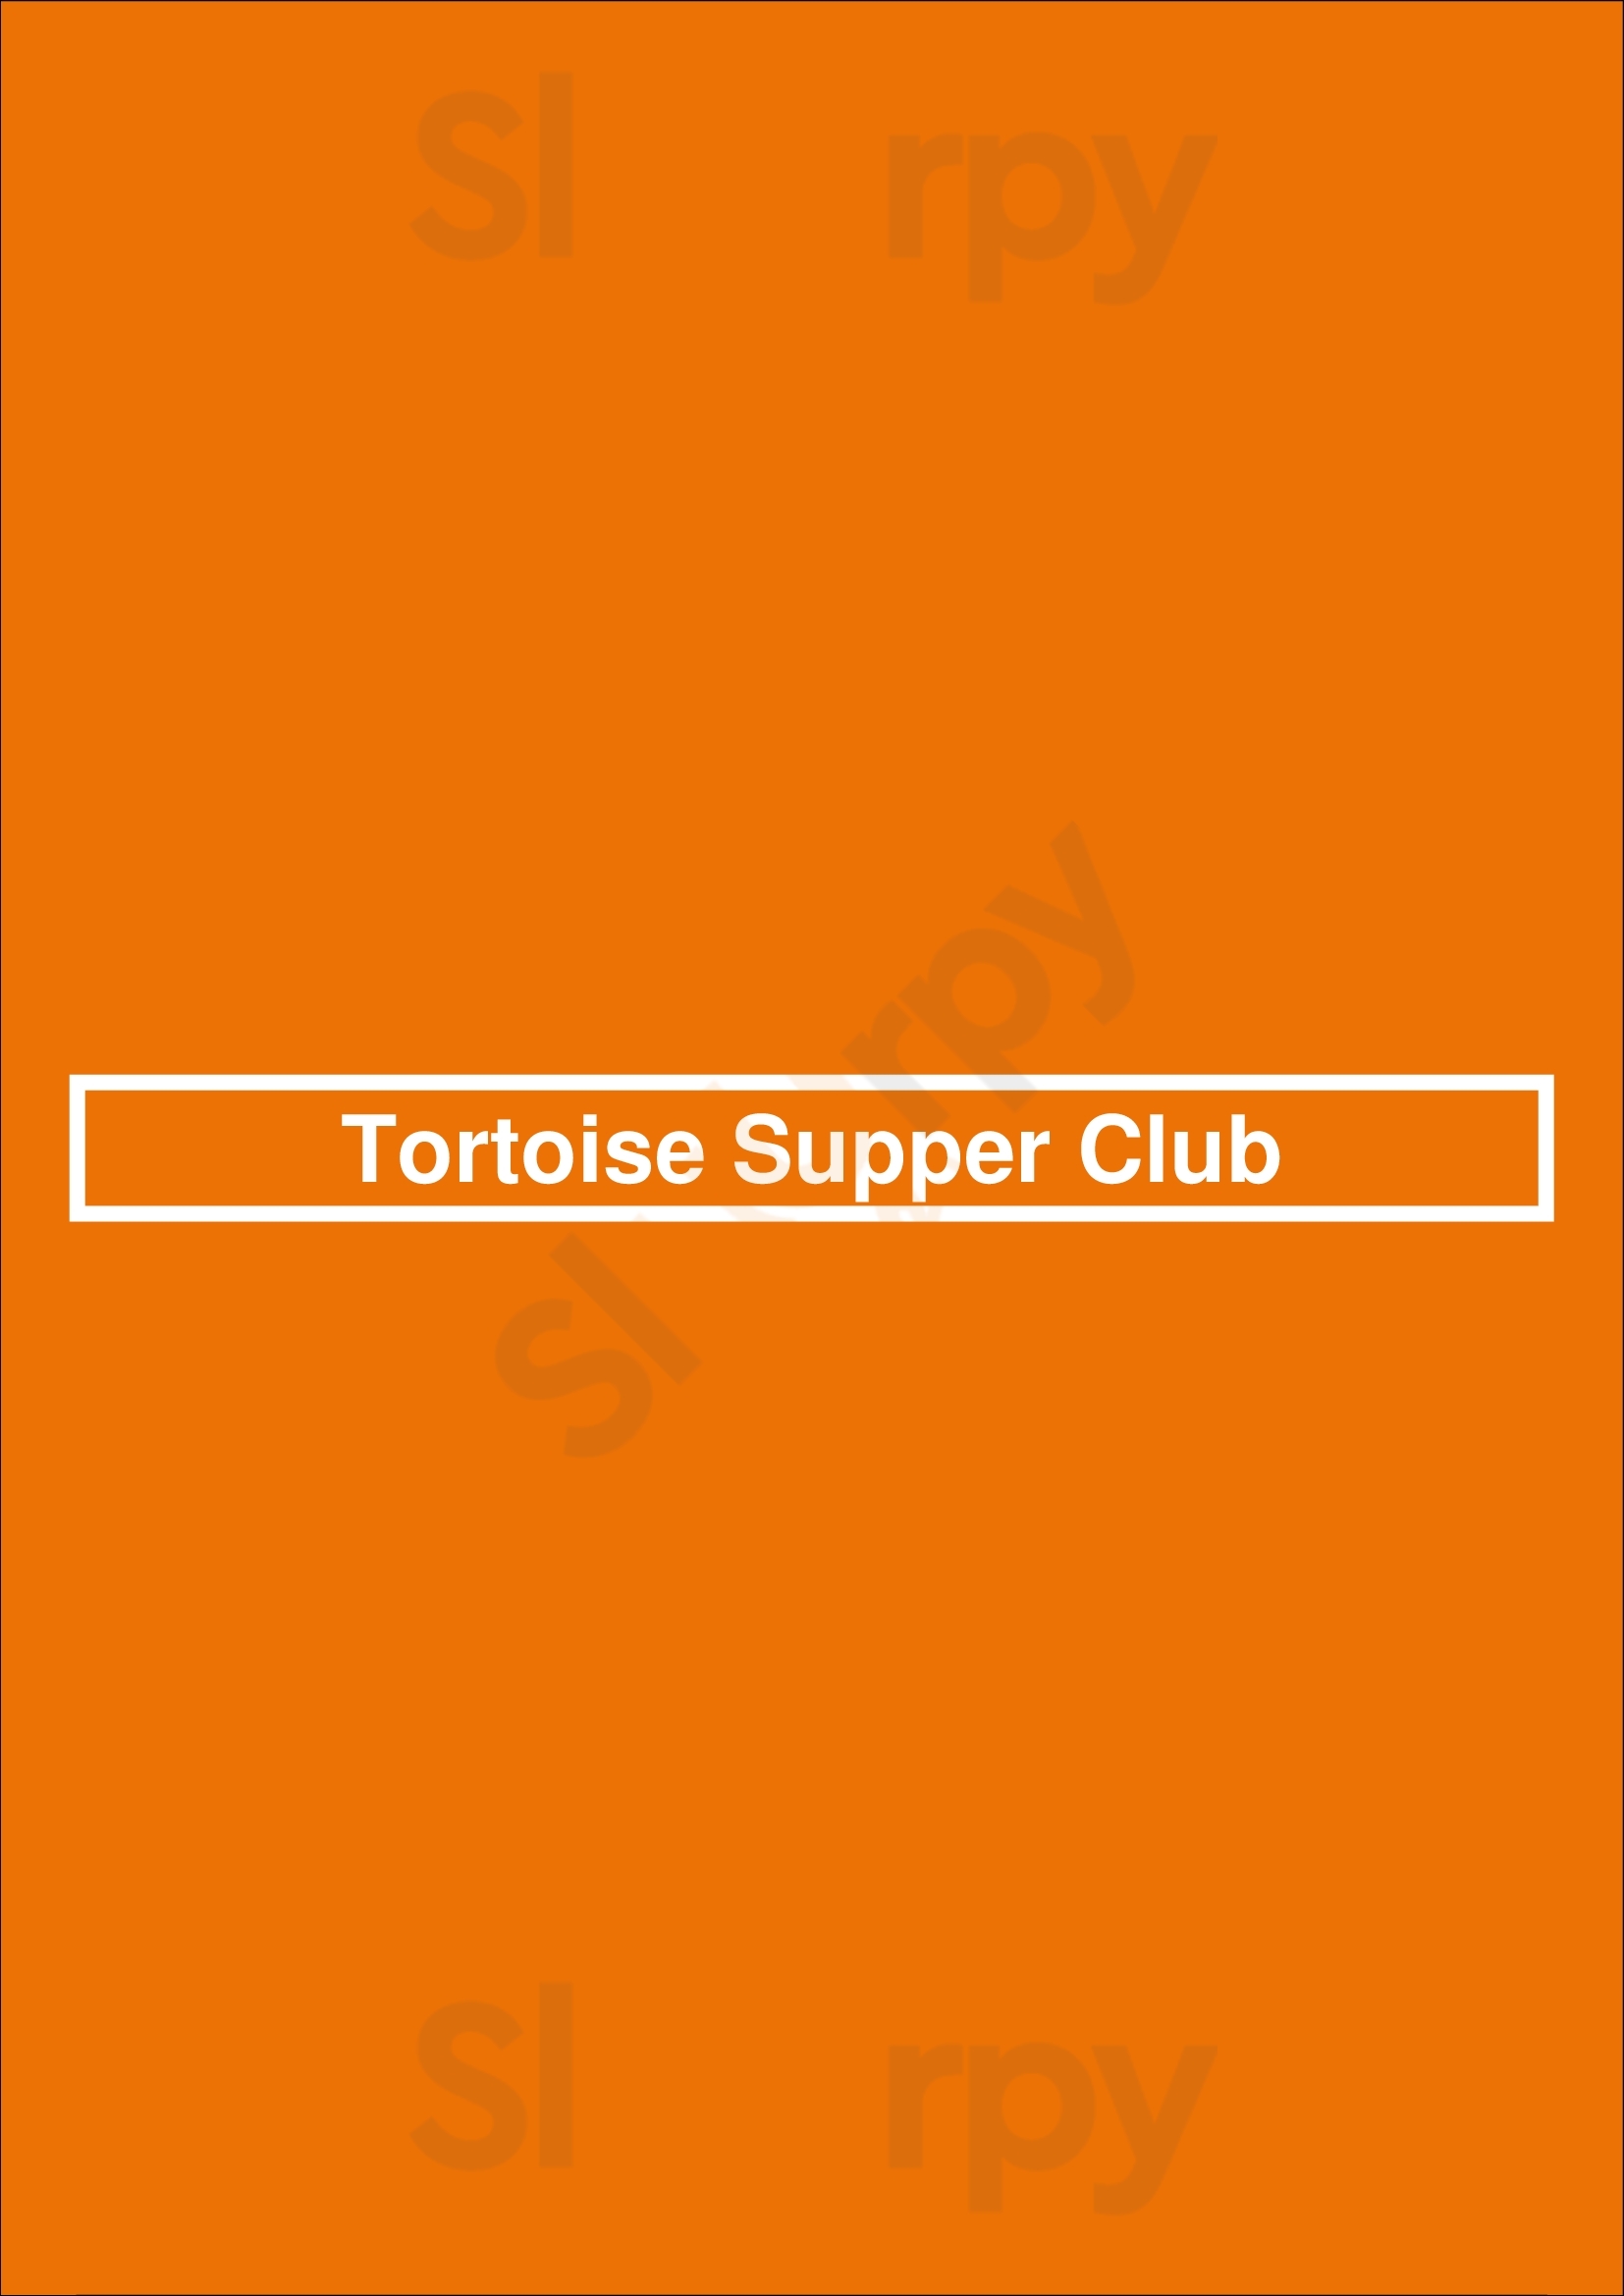 Tortoise Supper Club Chicago Menu - 1